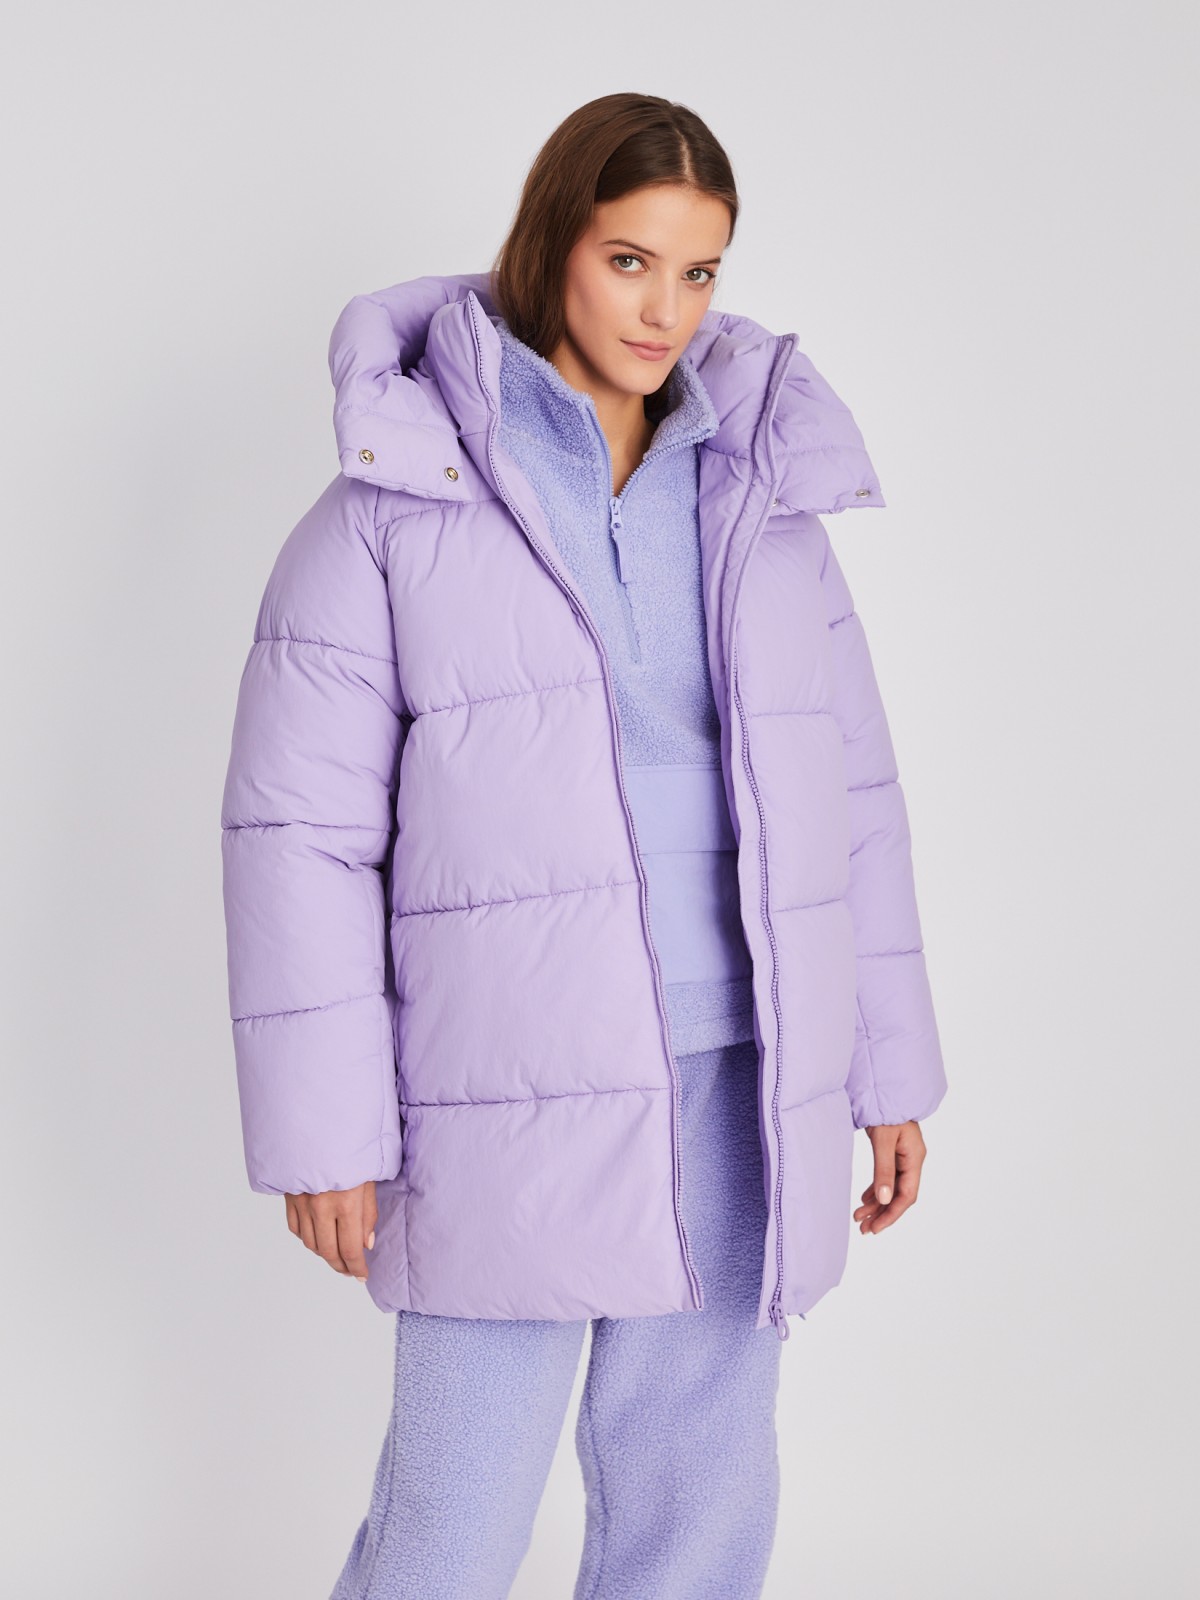 Тёплая куртка-пальто оверсайз силуэта с капюшоном zolla 02342520L054, цвет фиолетовый, размер S - фото 1